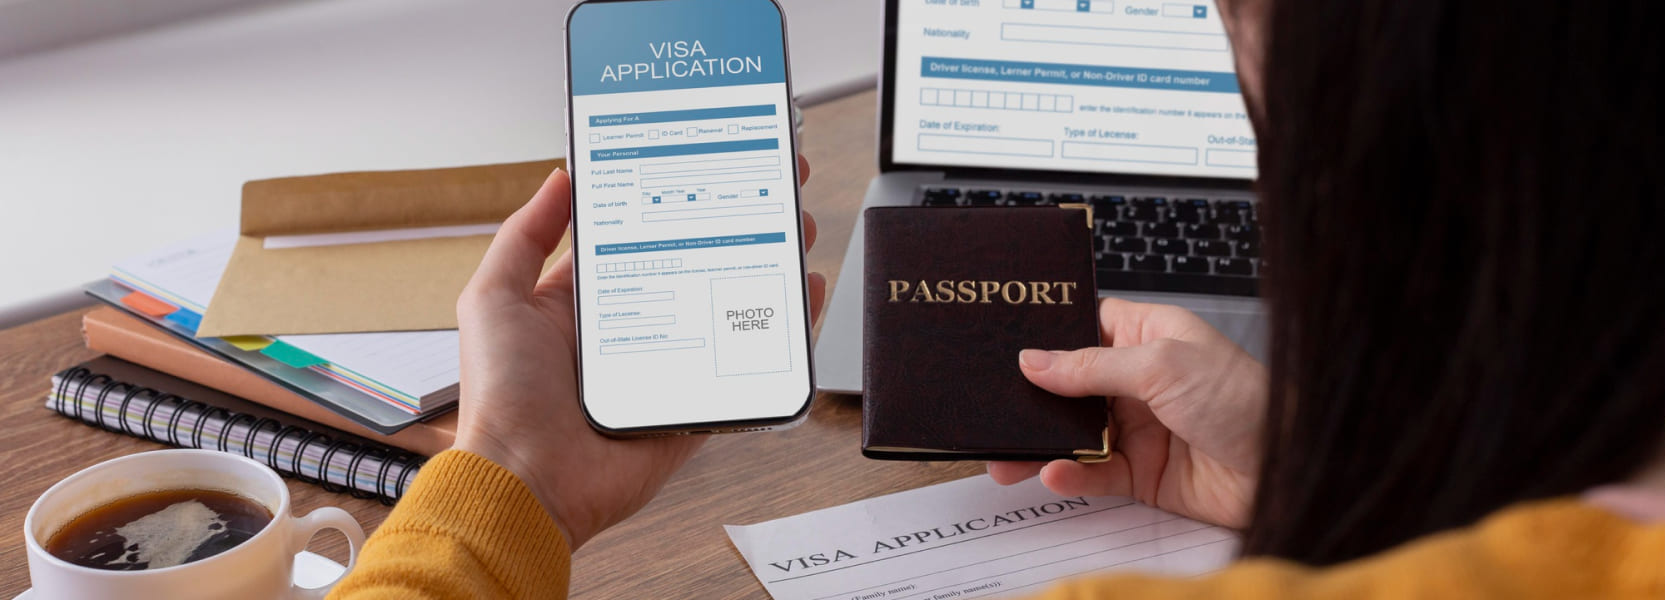 Online USA visa application